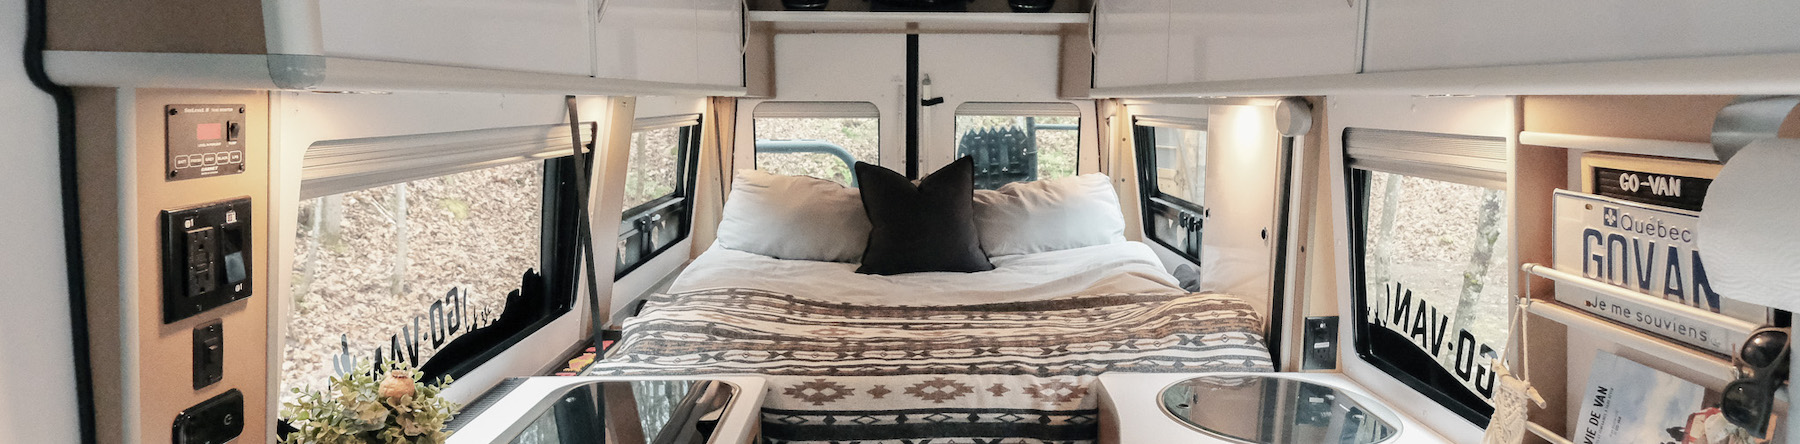 Peek Inside Go-Van’s Brand-New Sprinter Camper Van